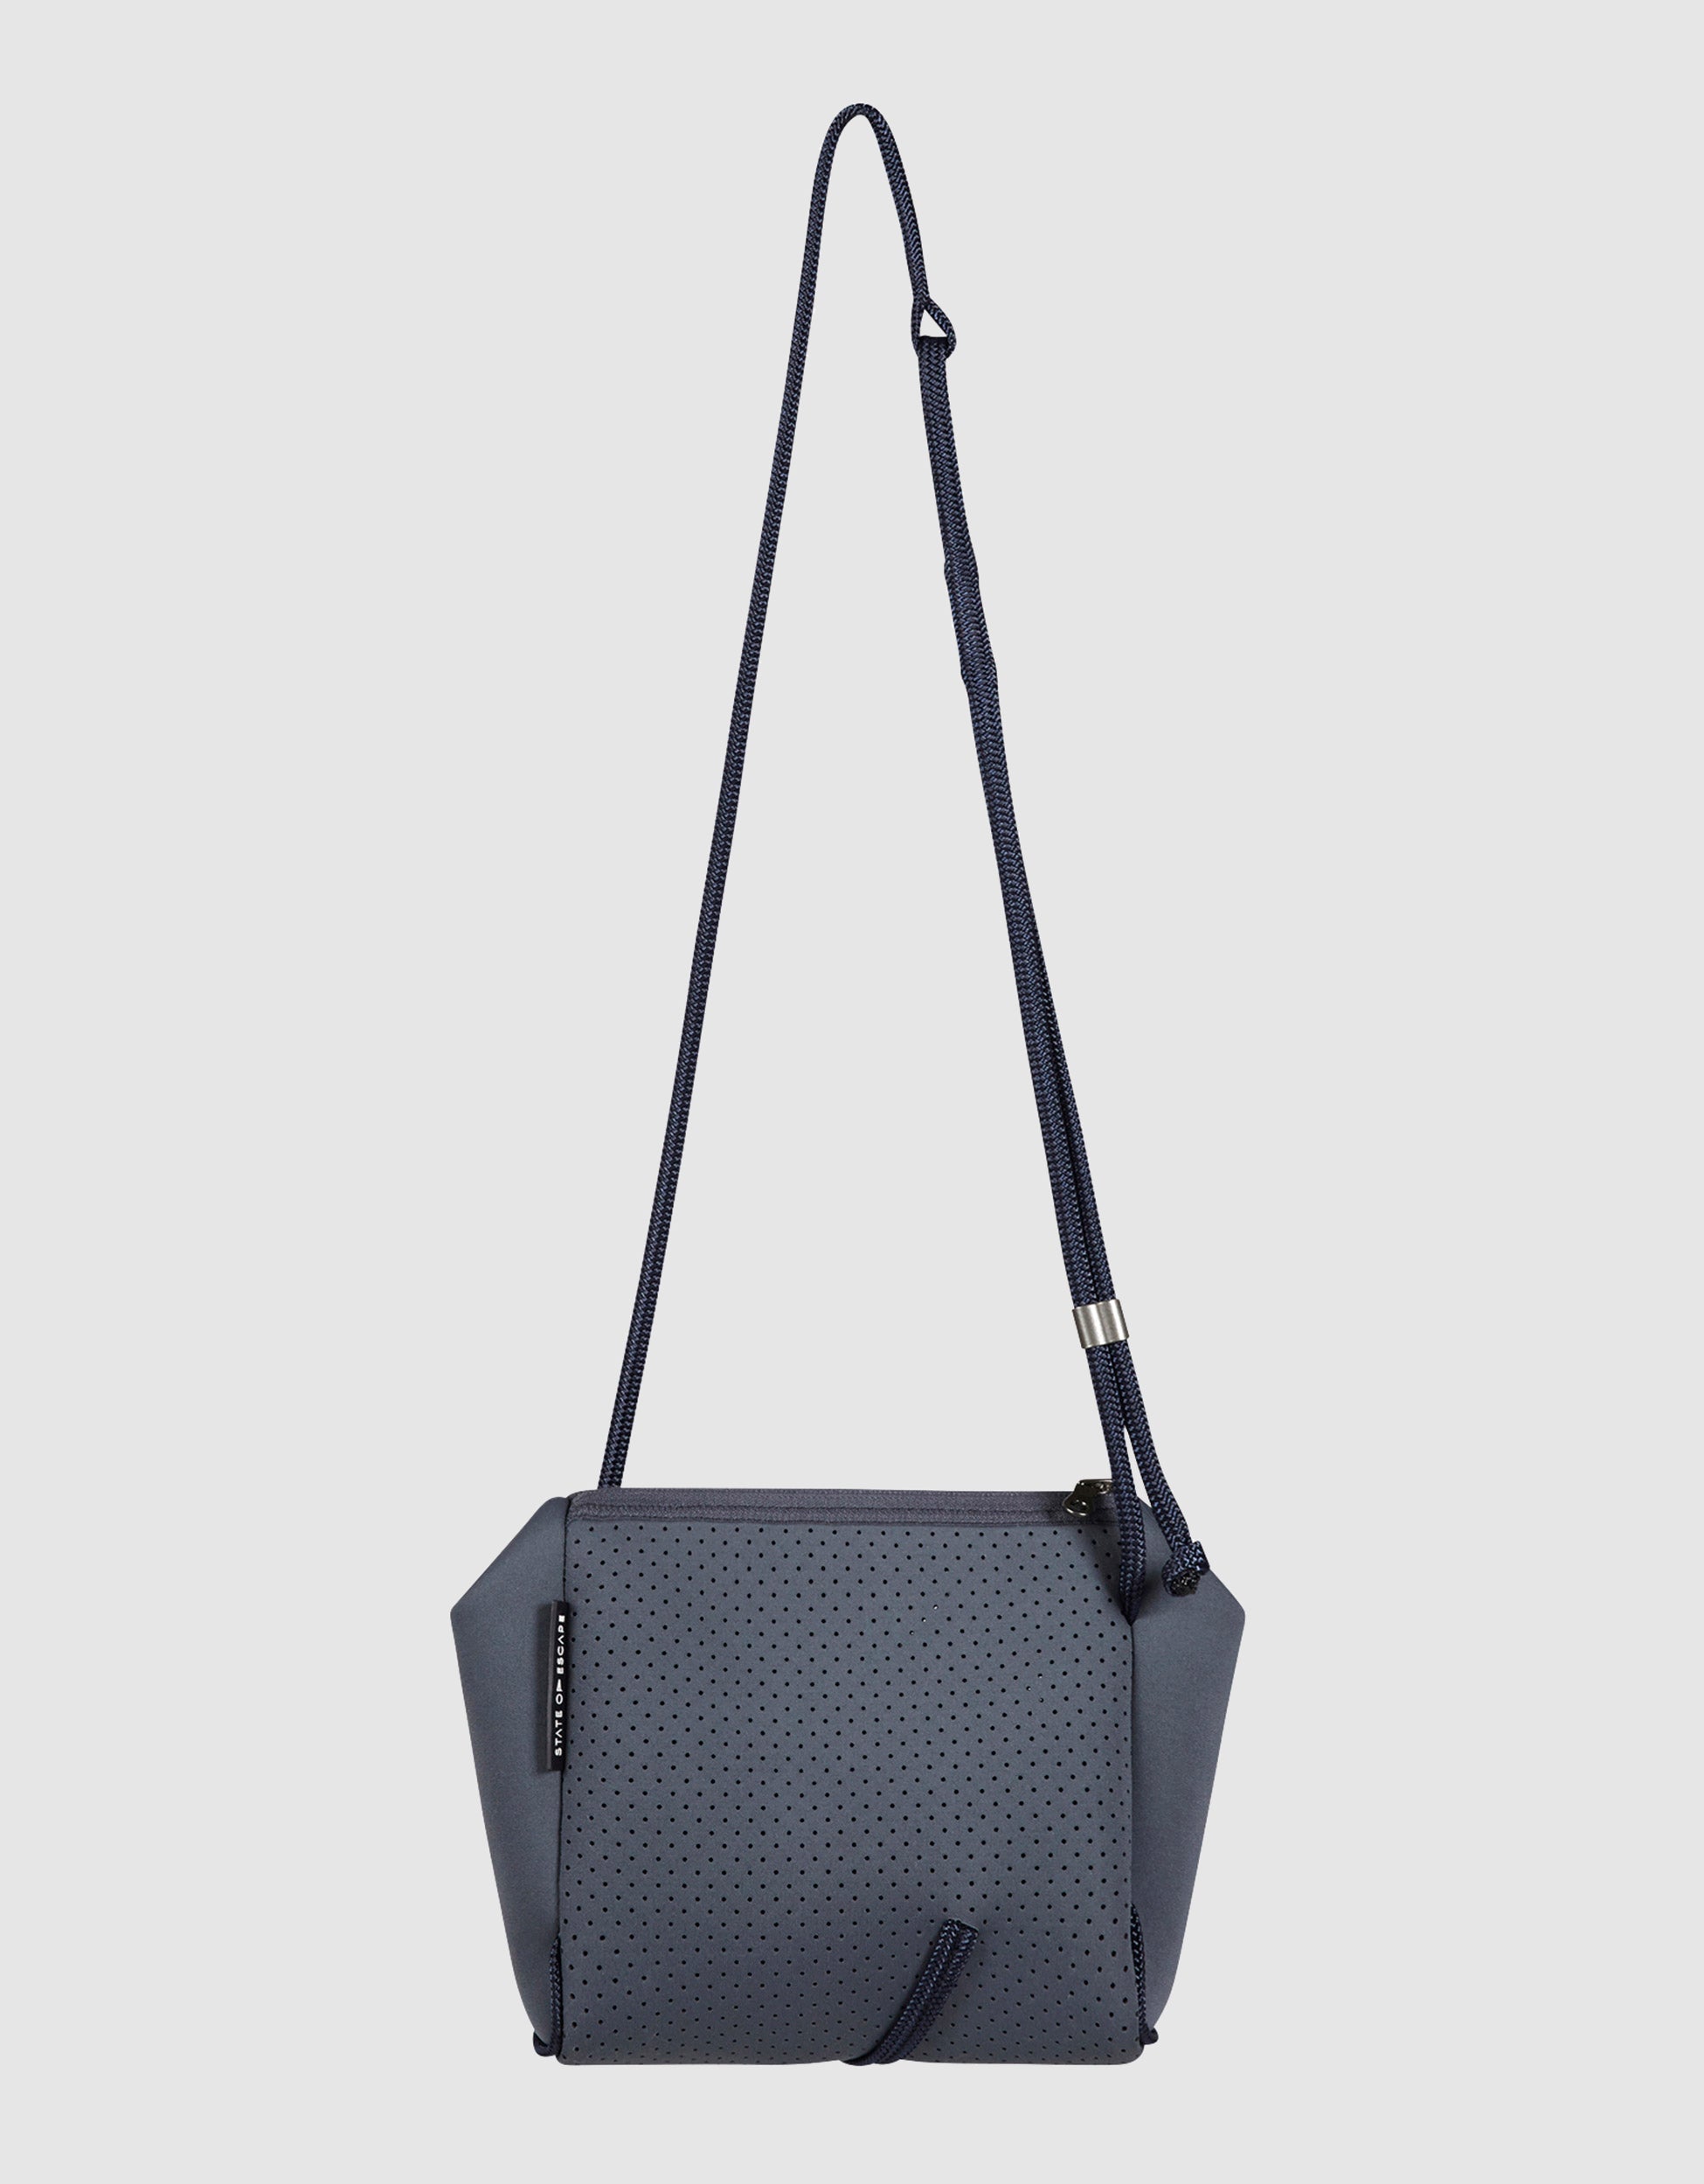 Small Designer Tote Bags Australian Made | State of Escape®